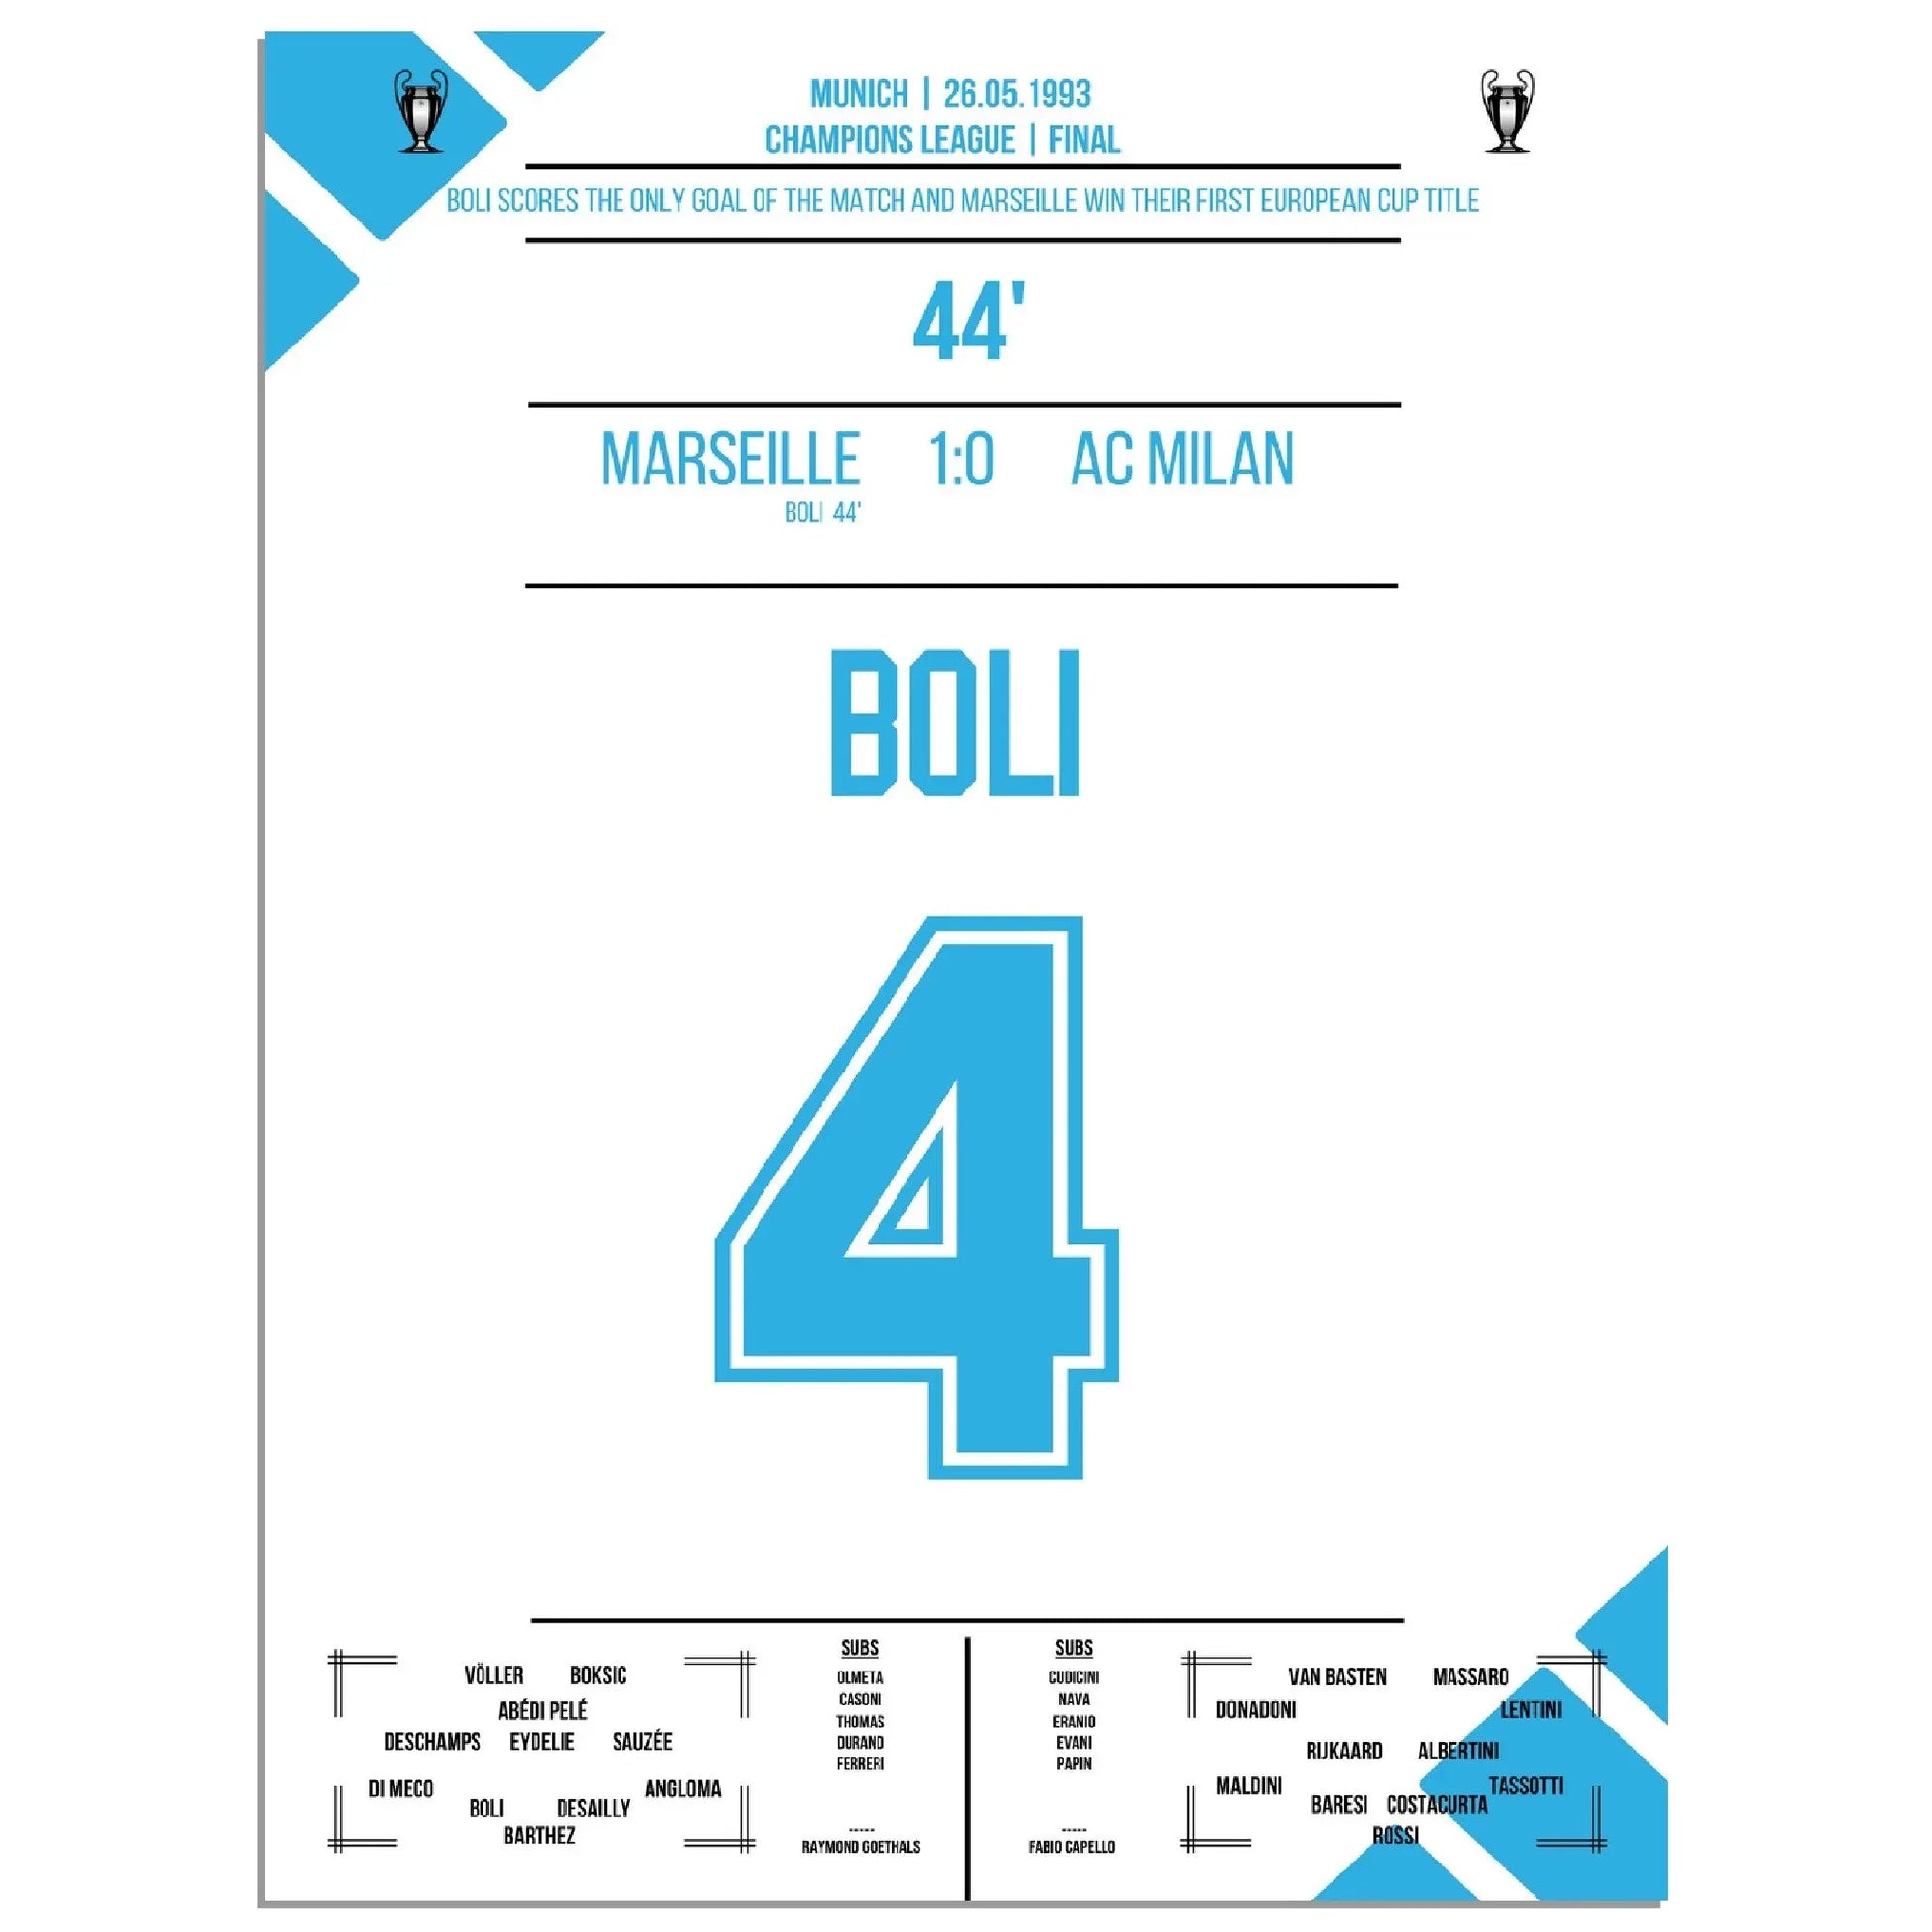 Bolis Kopfballtor entscheidet das erste Champions League Finale 1993 Marseille - Mailand 